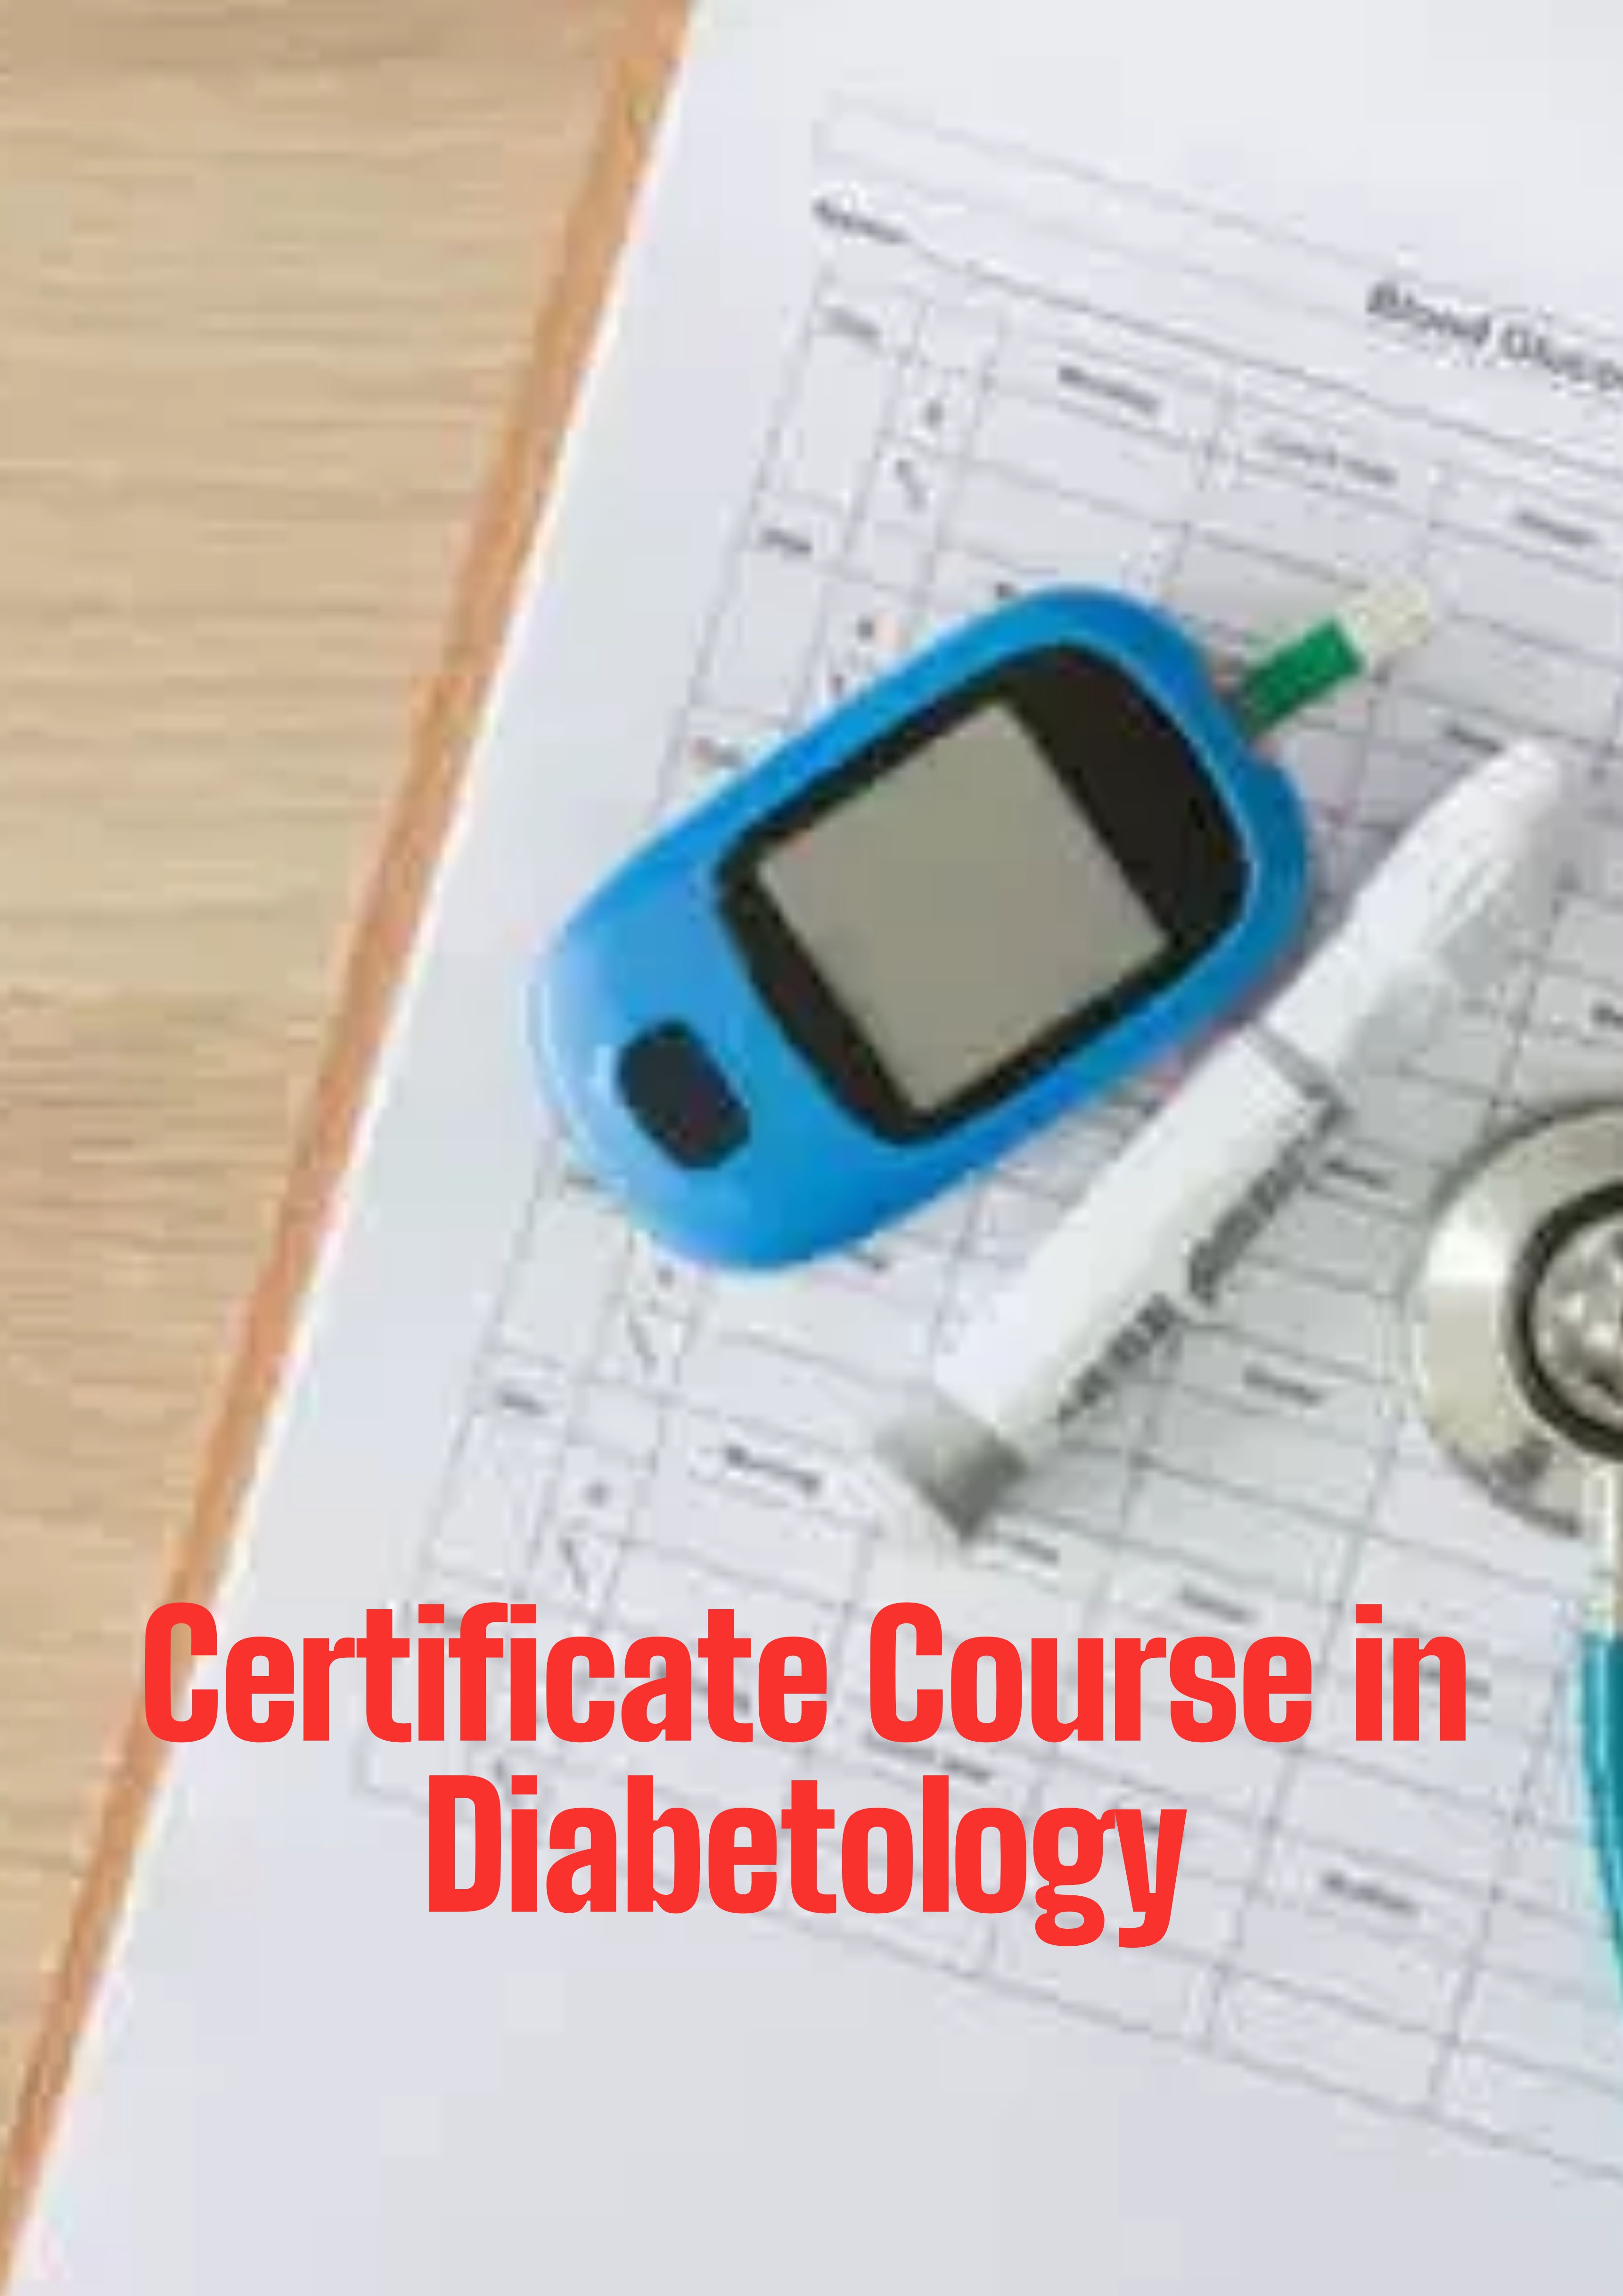 Certificate Course in Diabetology